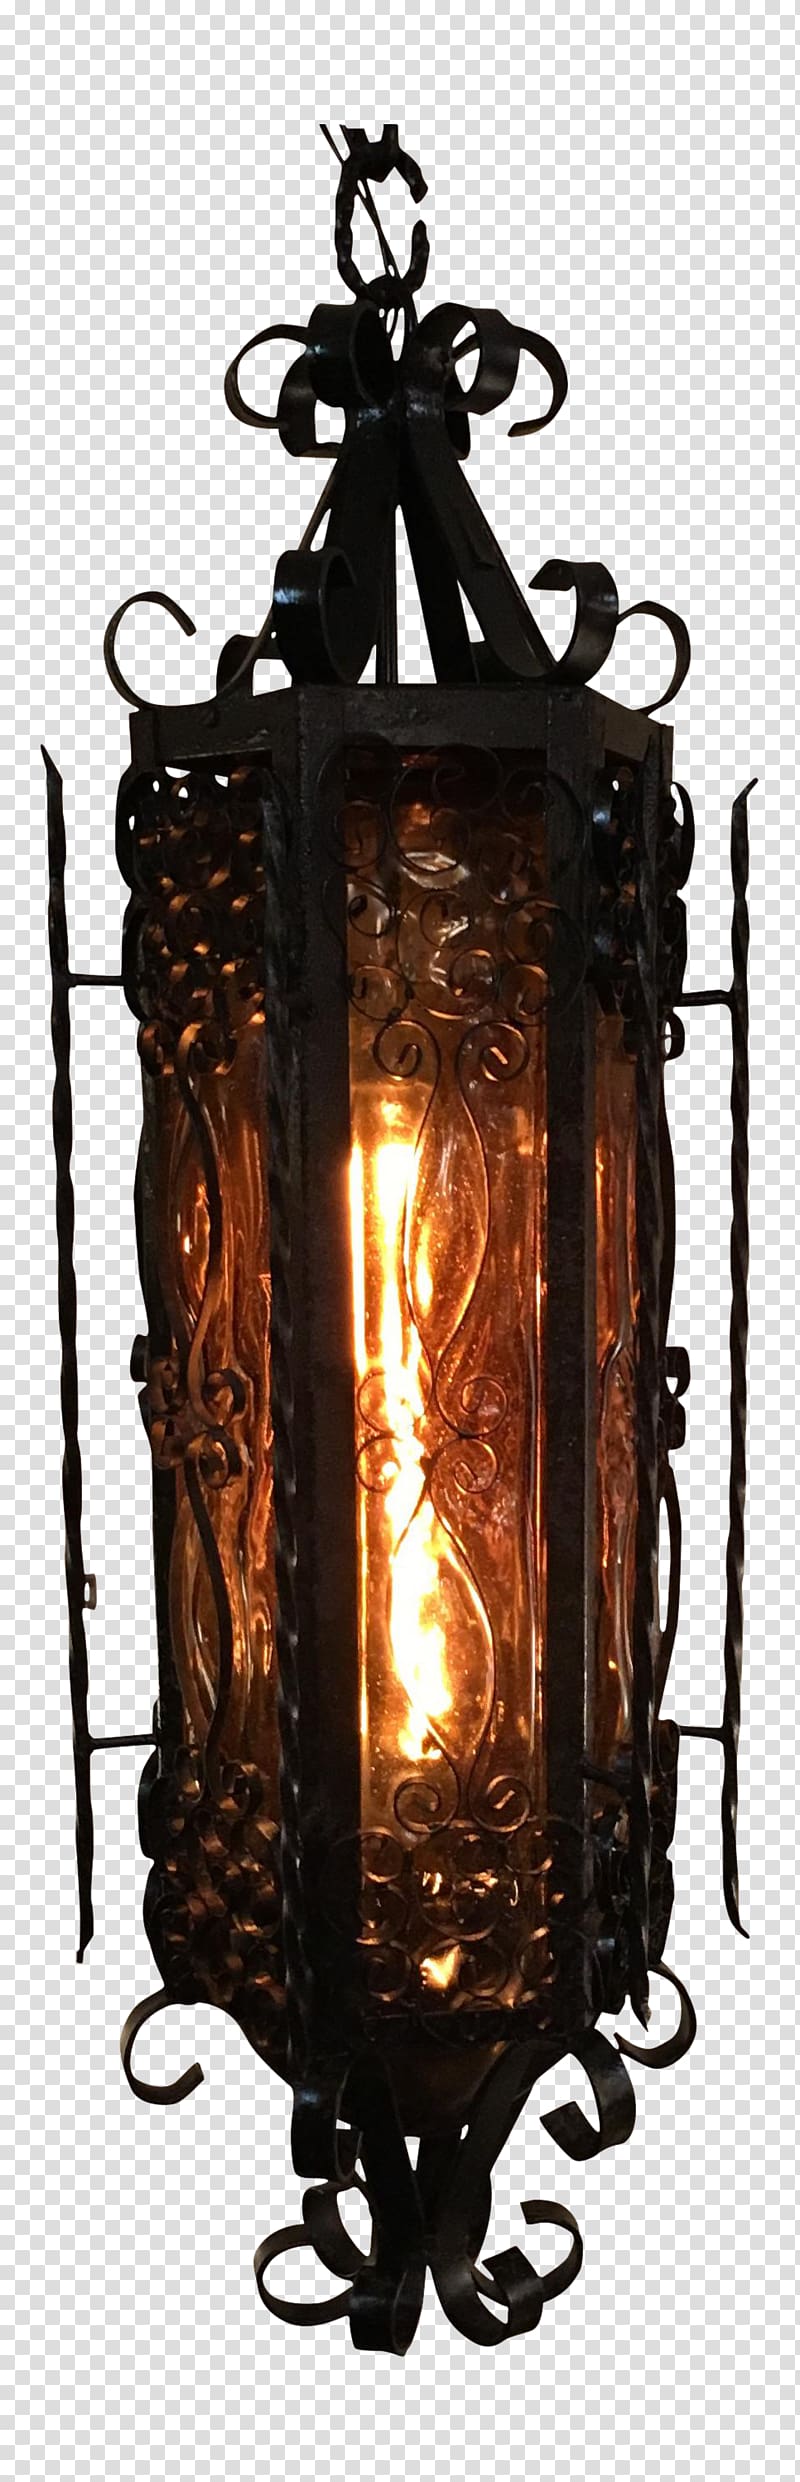 Pendant light Wrought iron Light fixture Lantern, hanging lamps transparent background PNG clipart